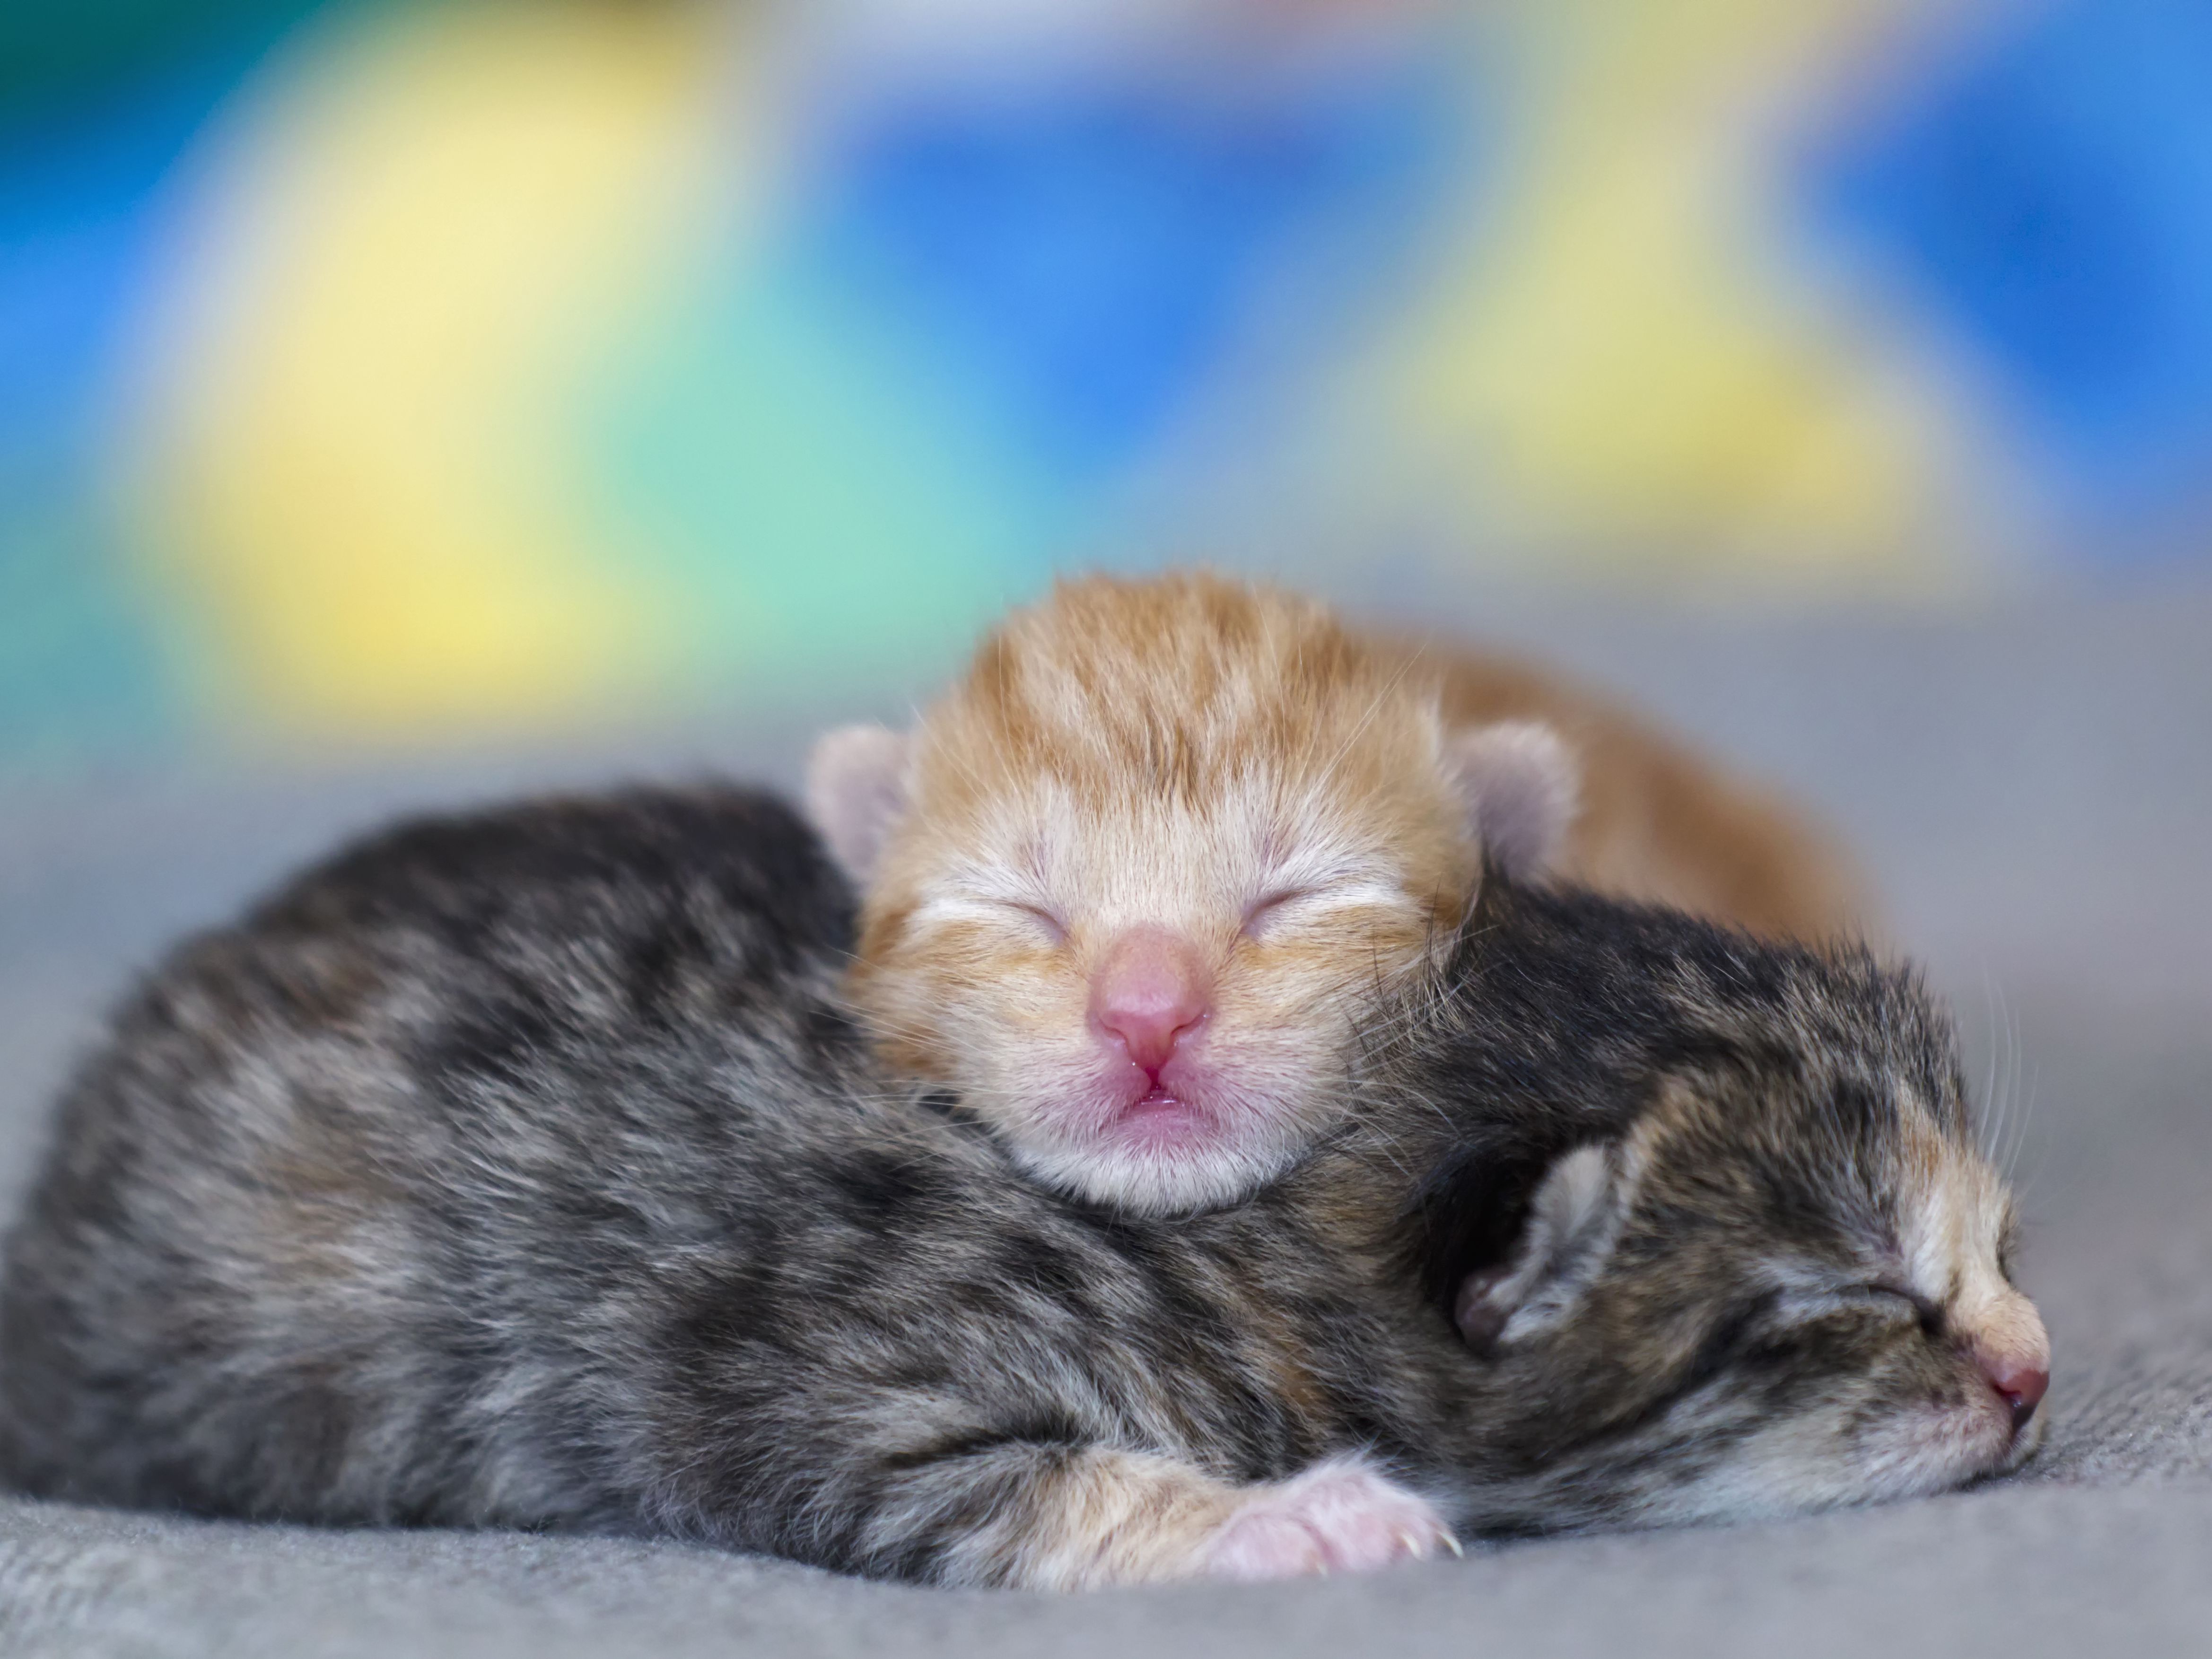 What are newborn kittens called?